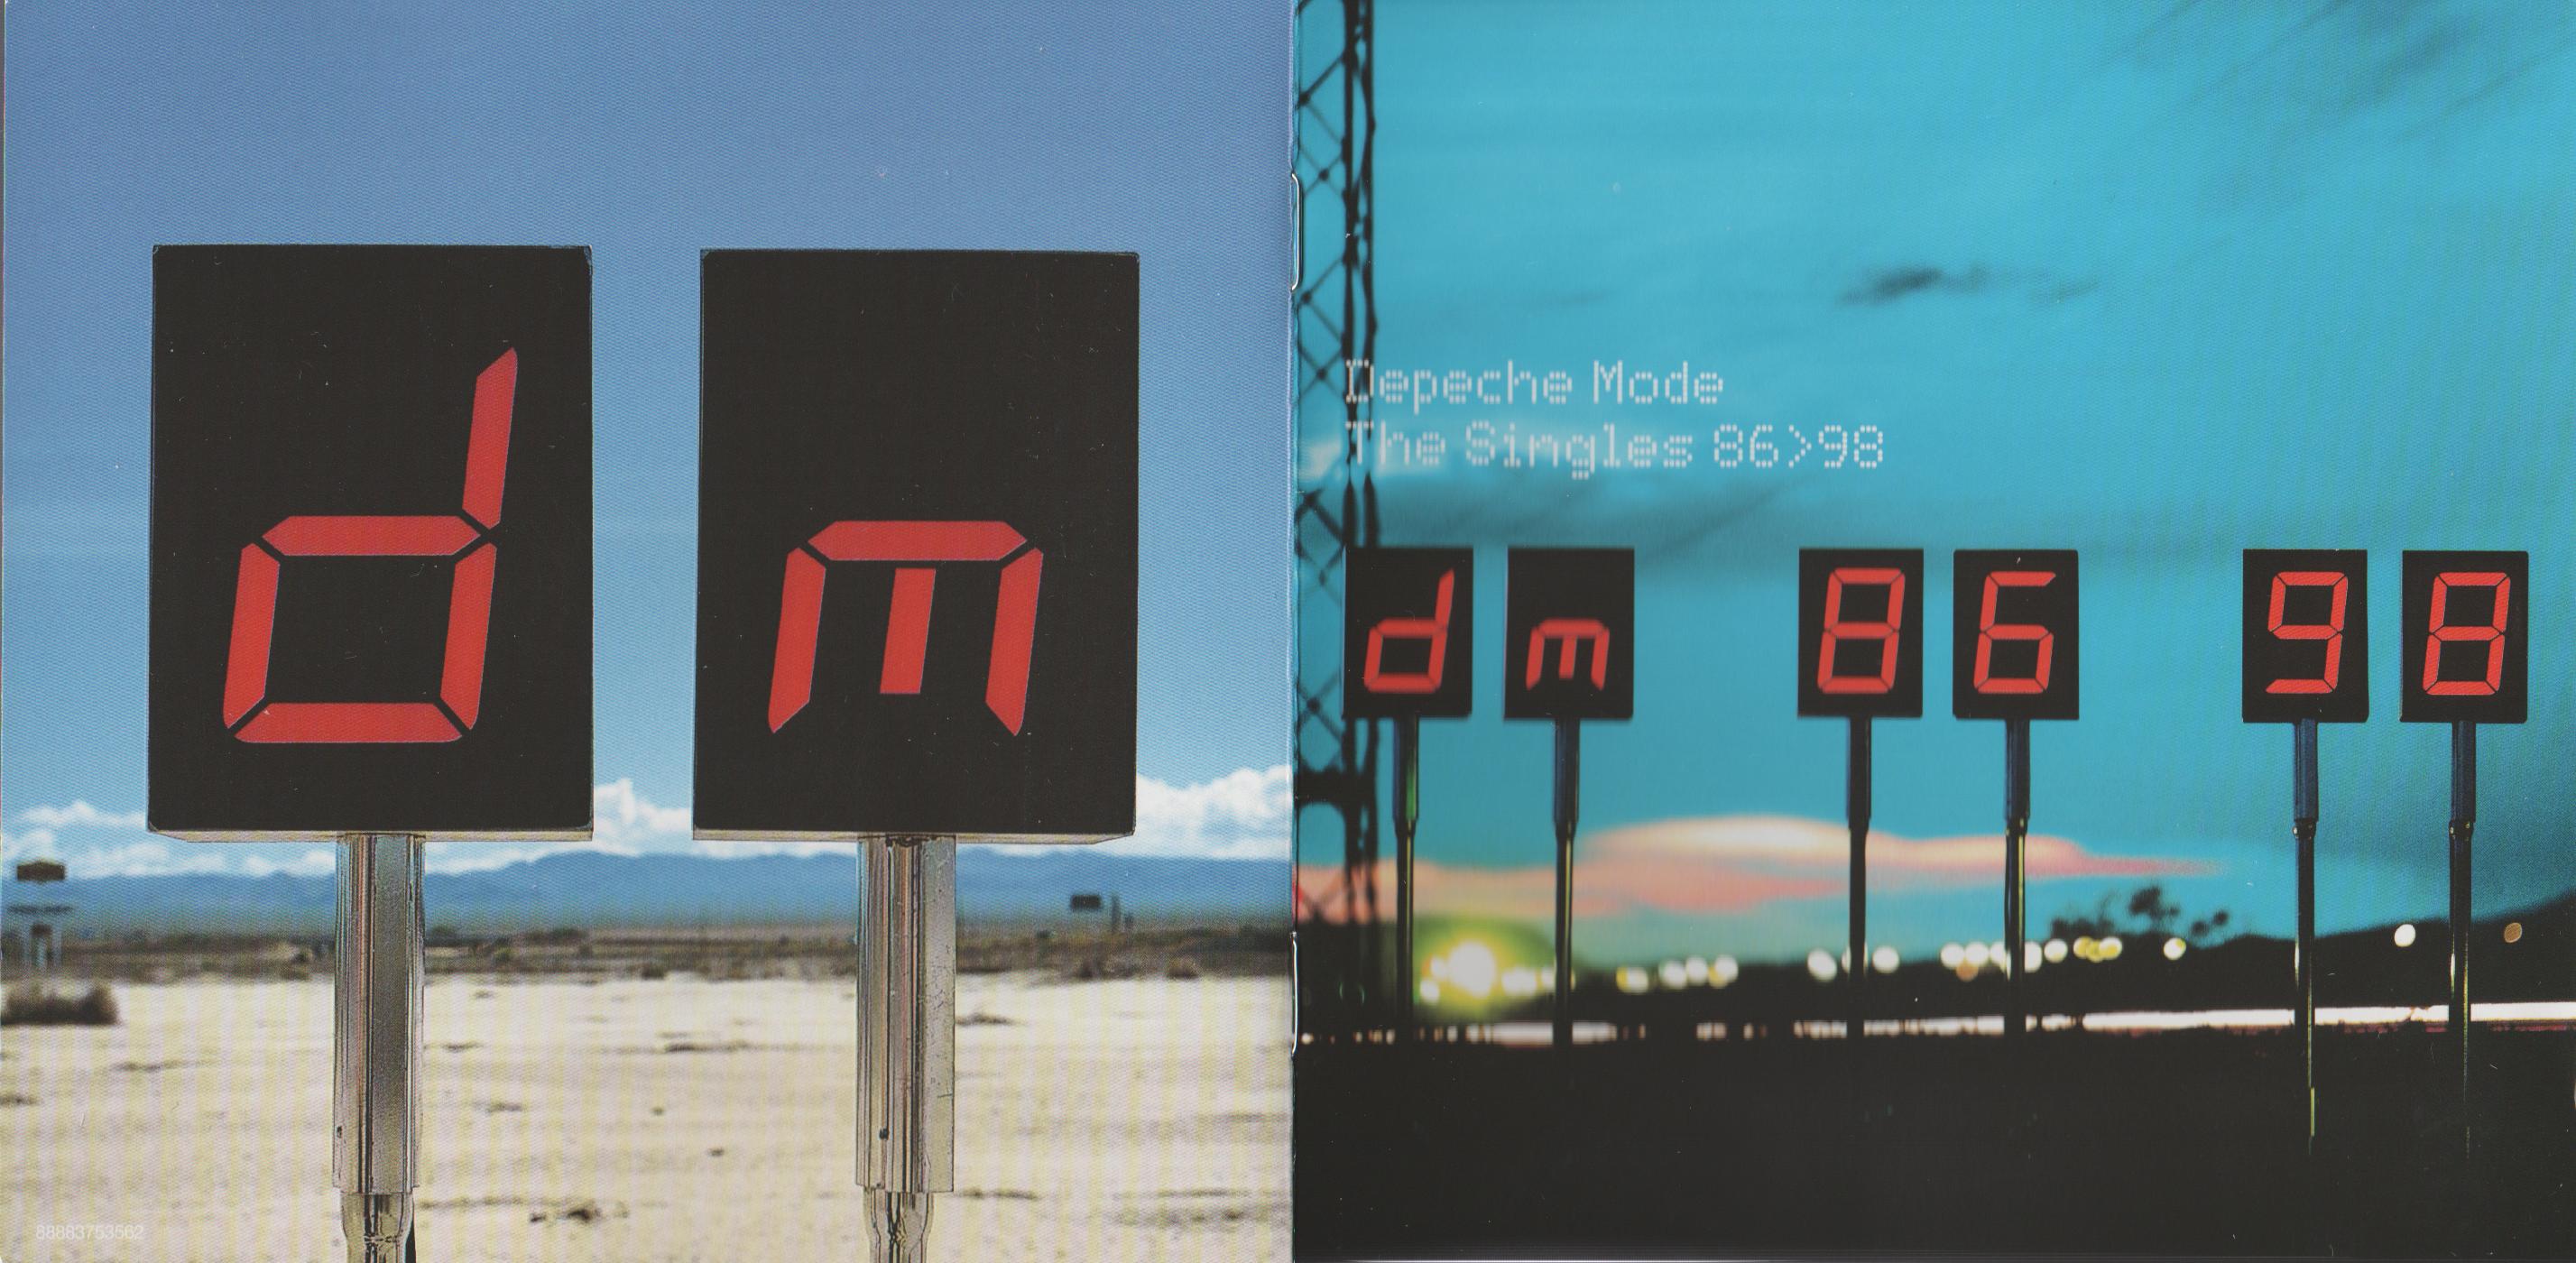 Depeche mode singles box